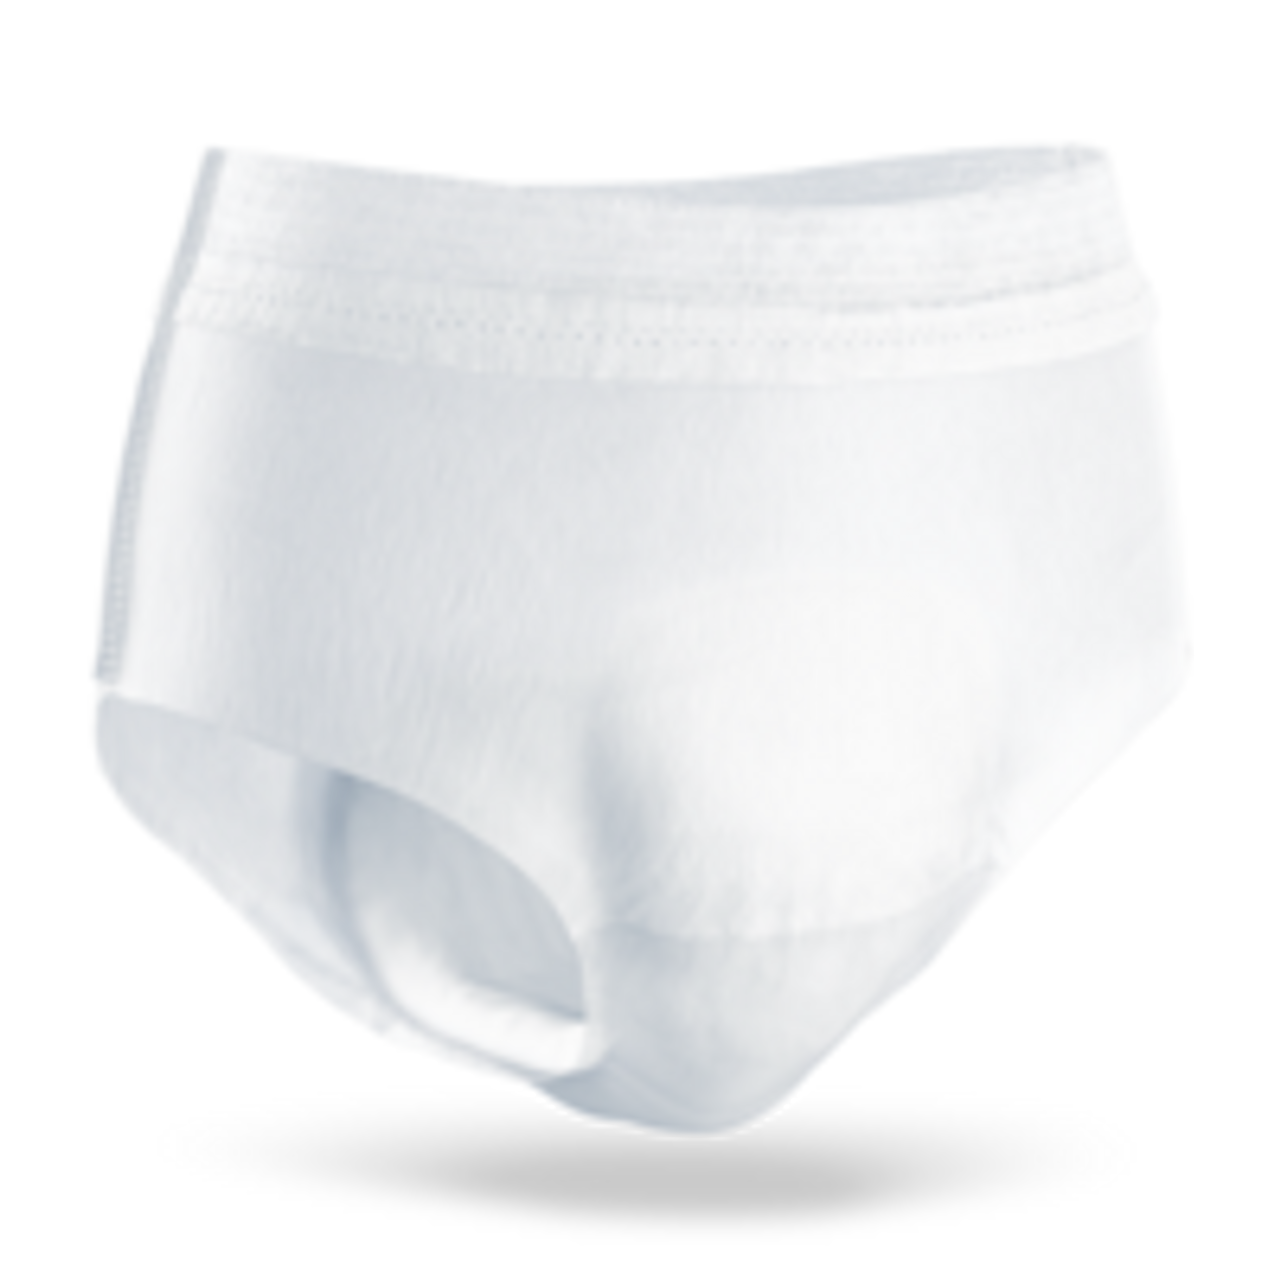 Tena Super Plus Heavy Protective Underwear for Women XL 48”-64